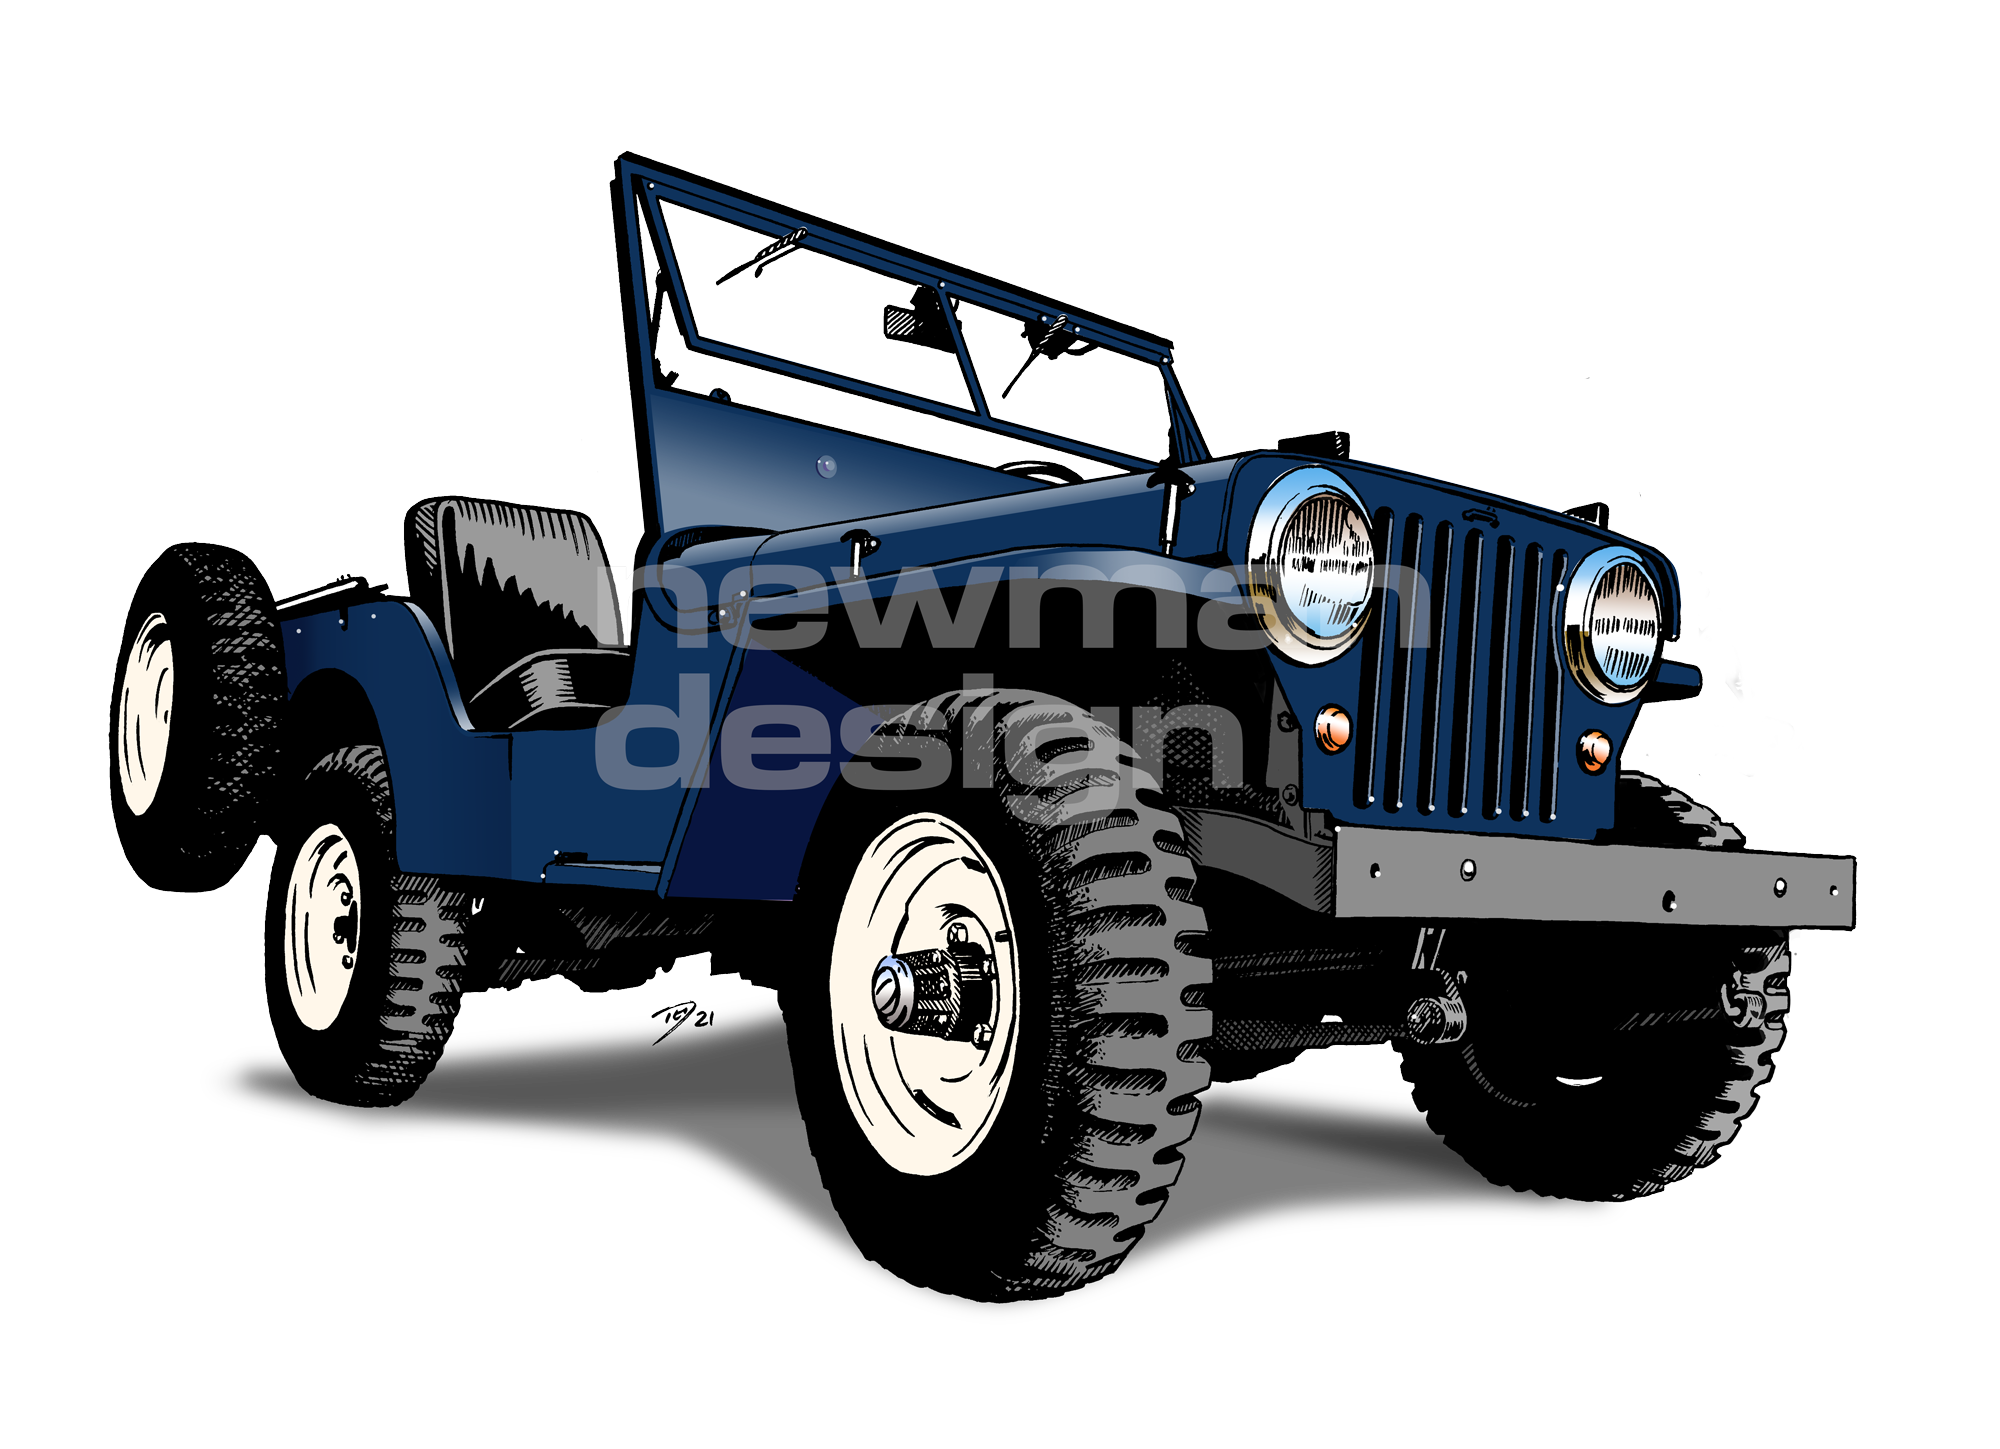 Willys Jeep cj2a normandy blue